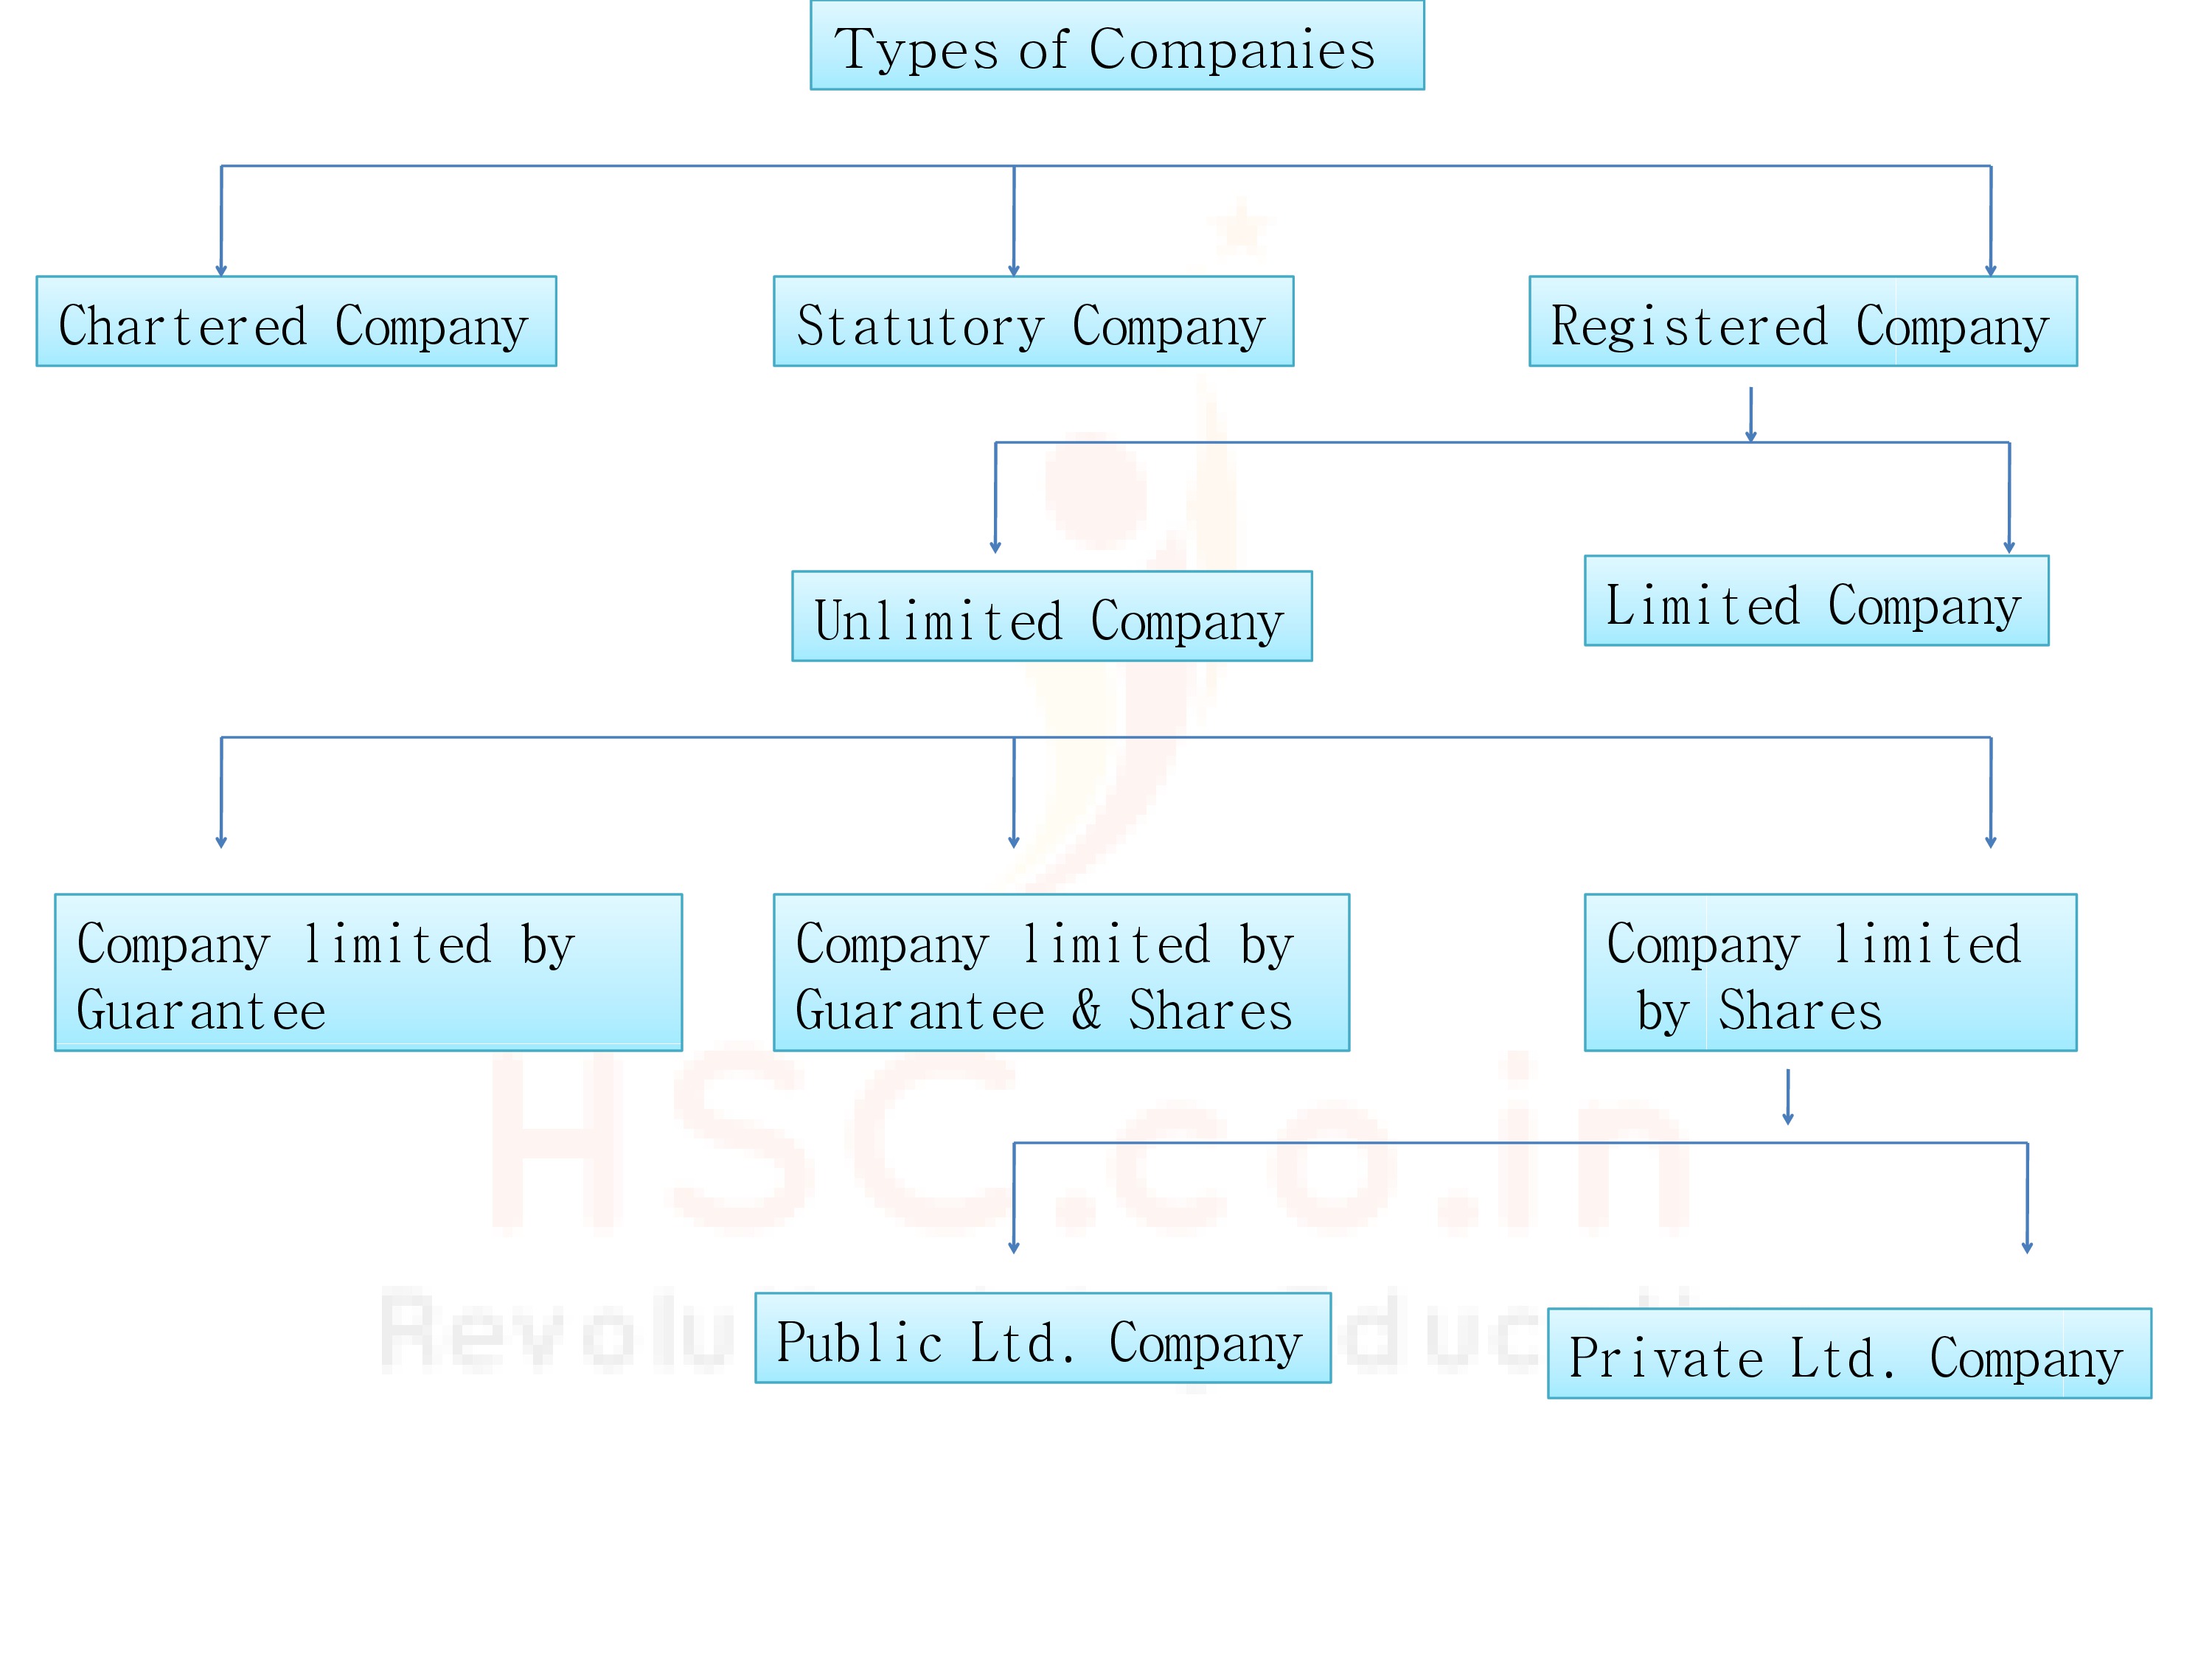 Types of companies